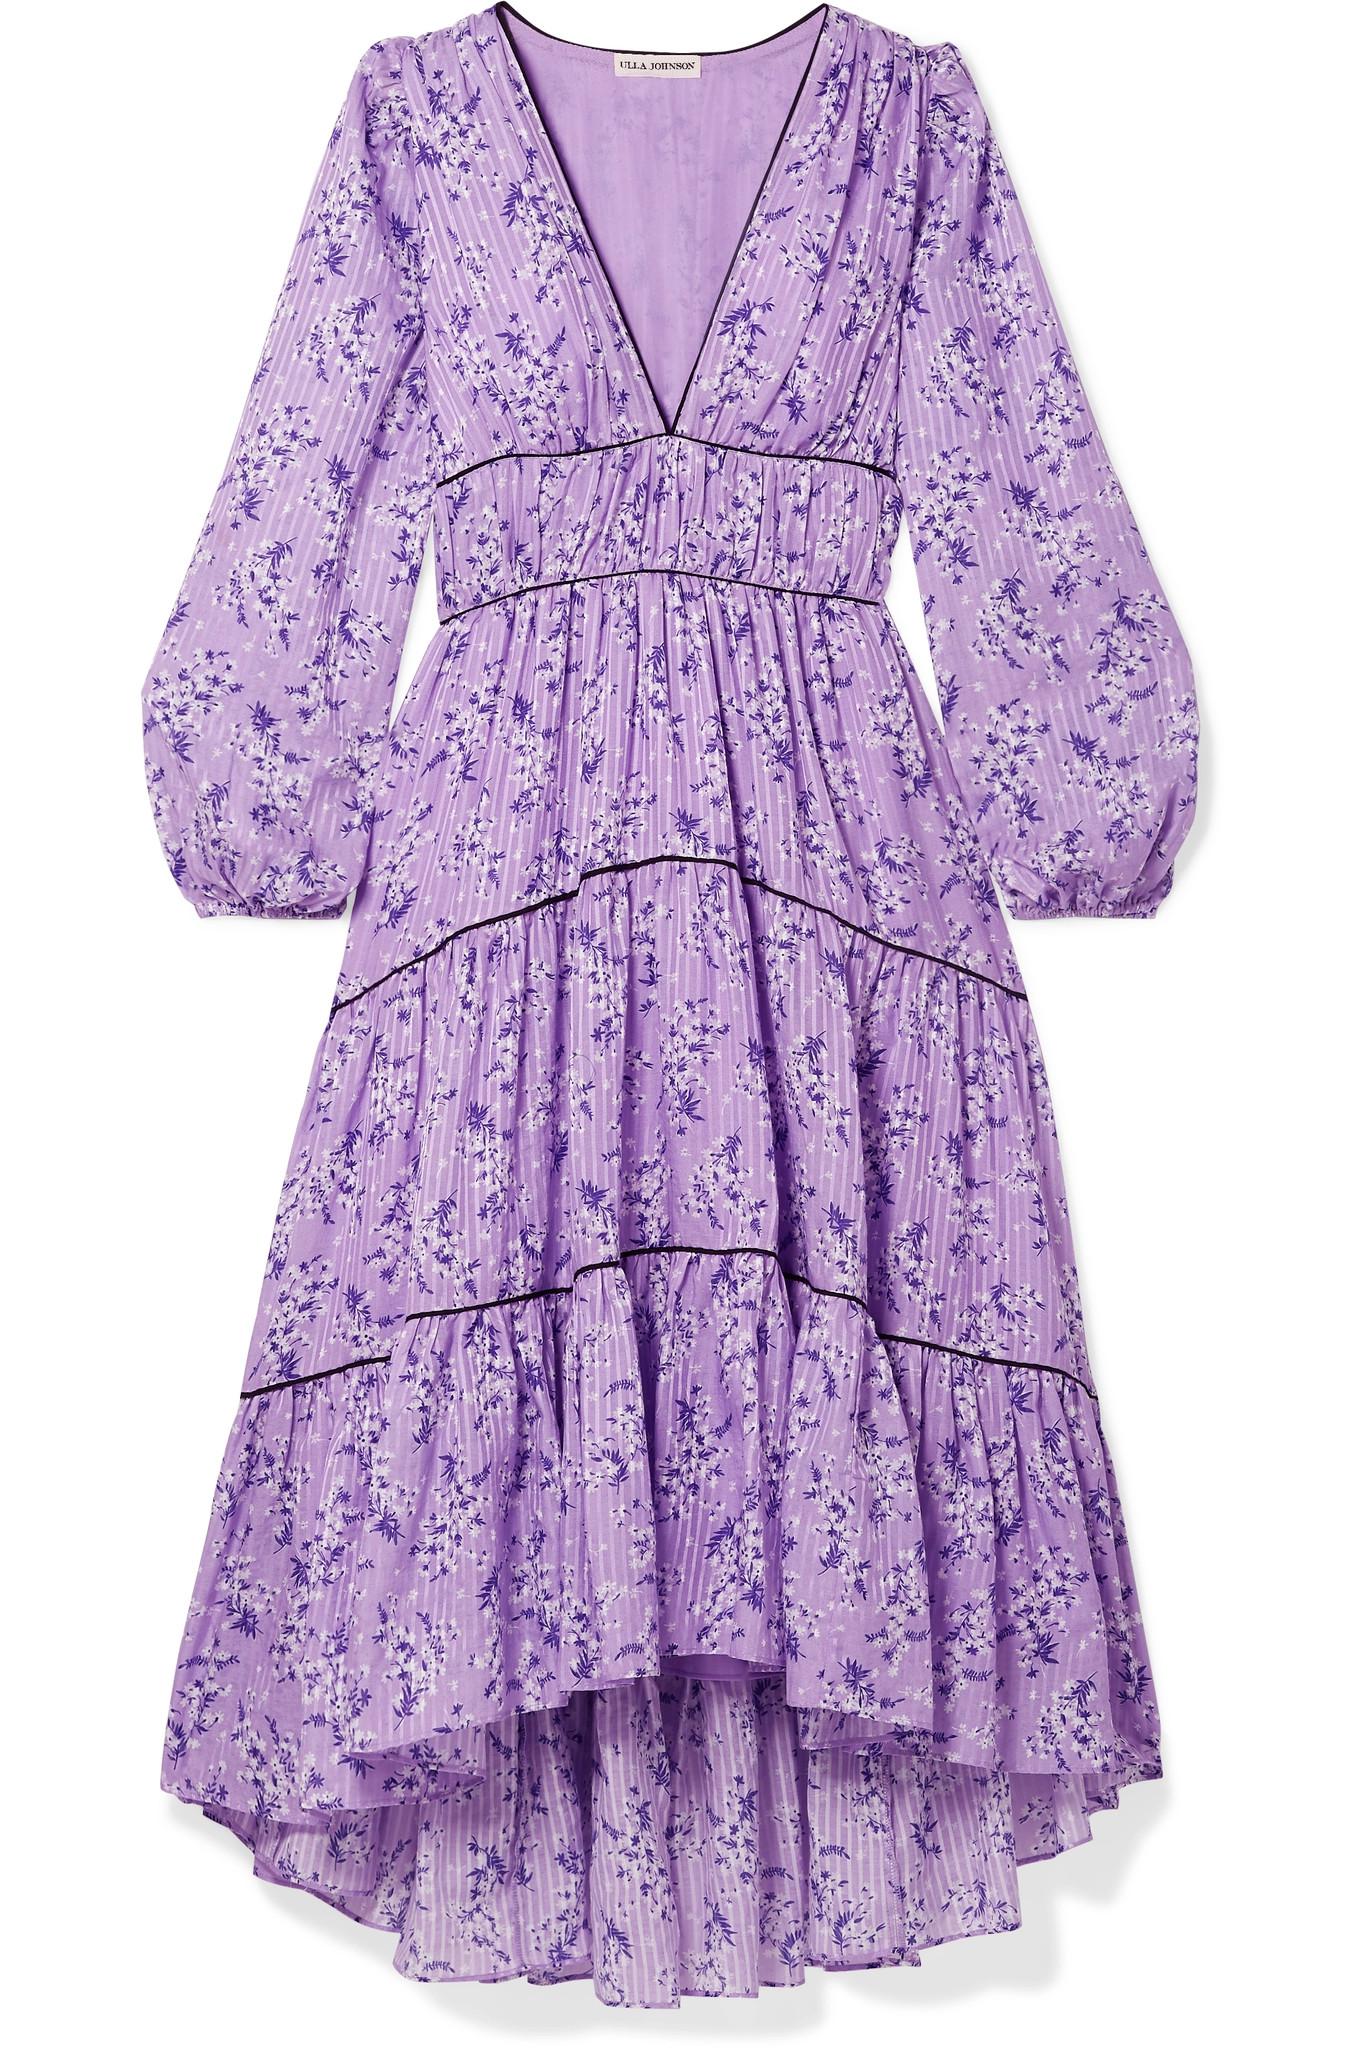 Lyst - Ulla Johnson Floral Print Midi Dress in Purple - Save 21%